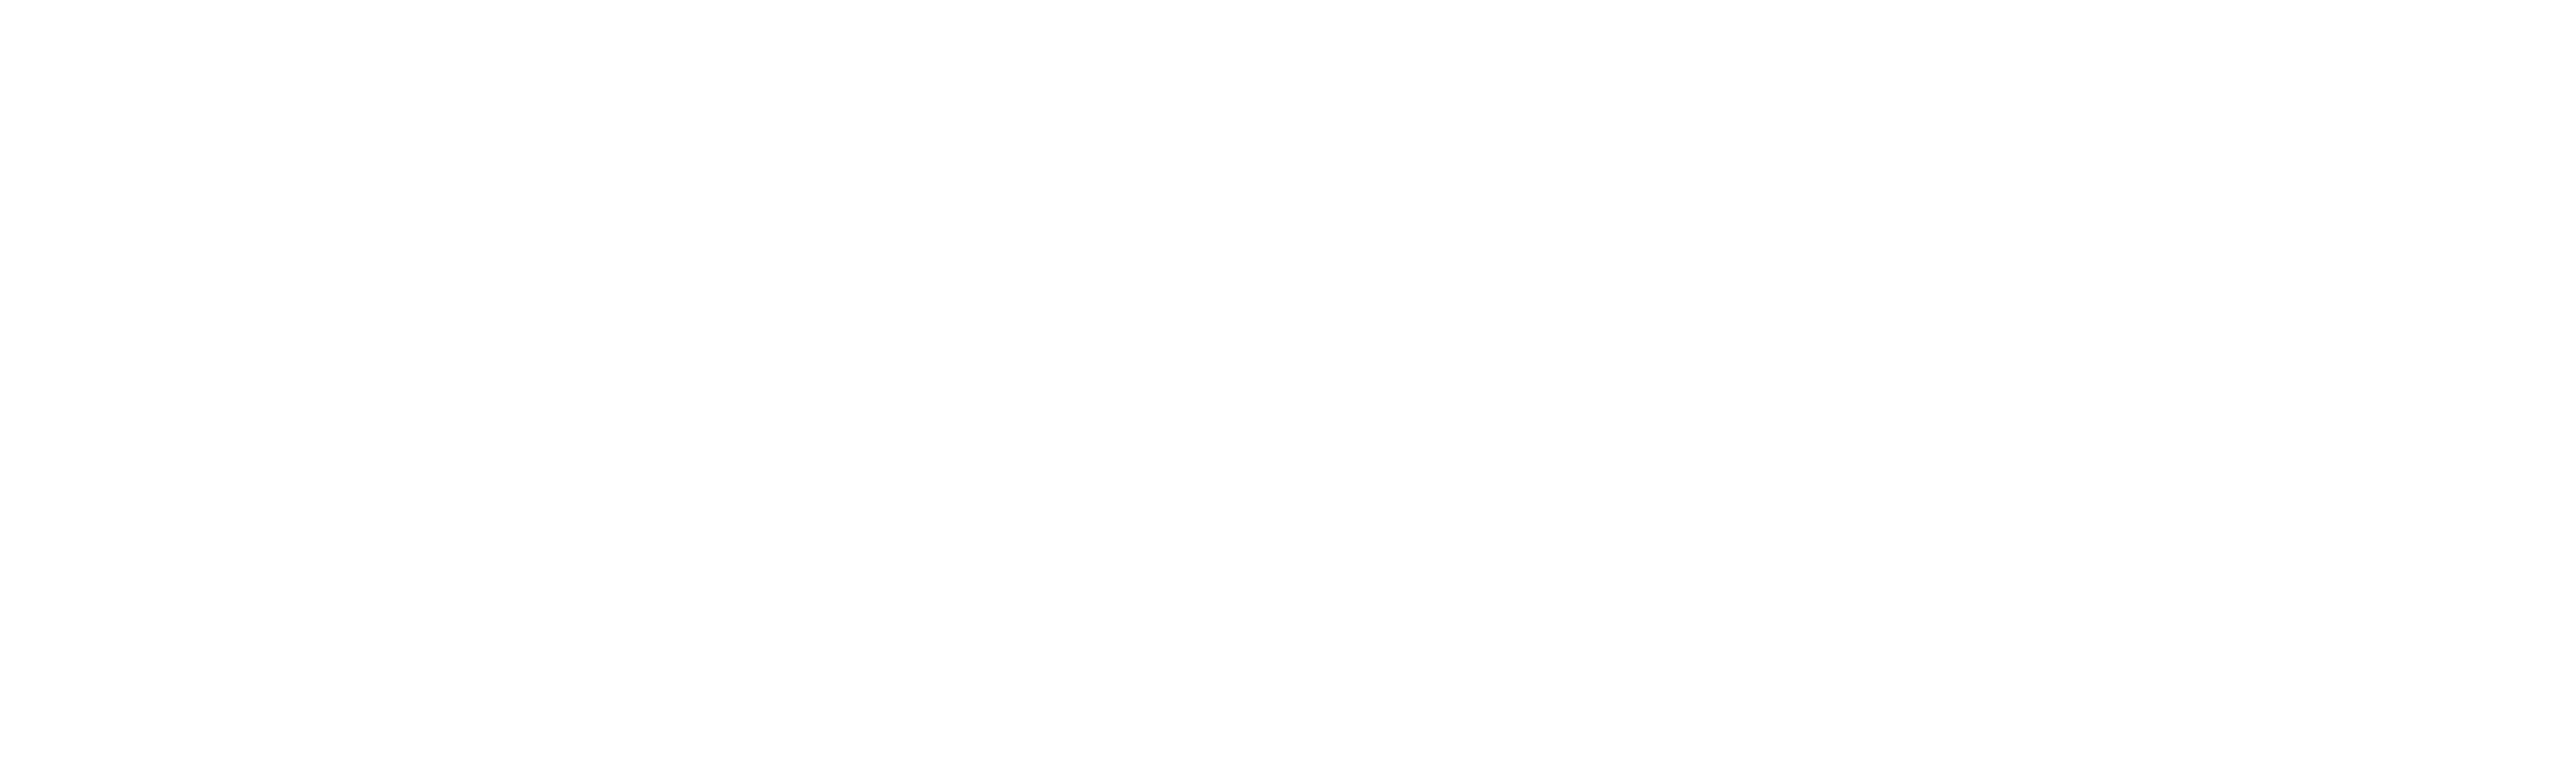 Drug and Alcohol Service Camden - White logo